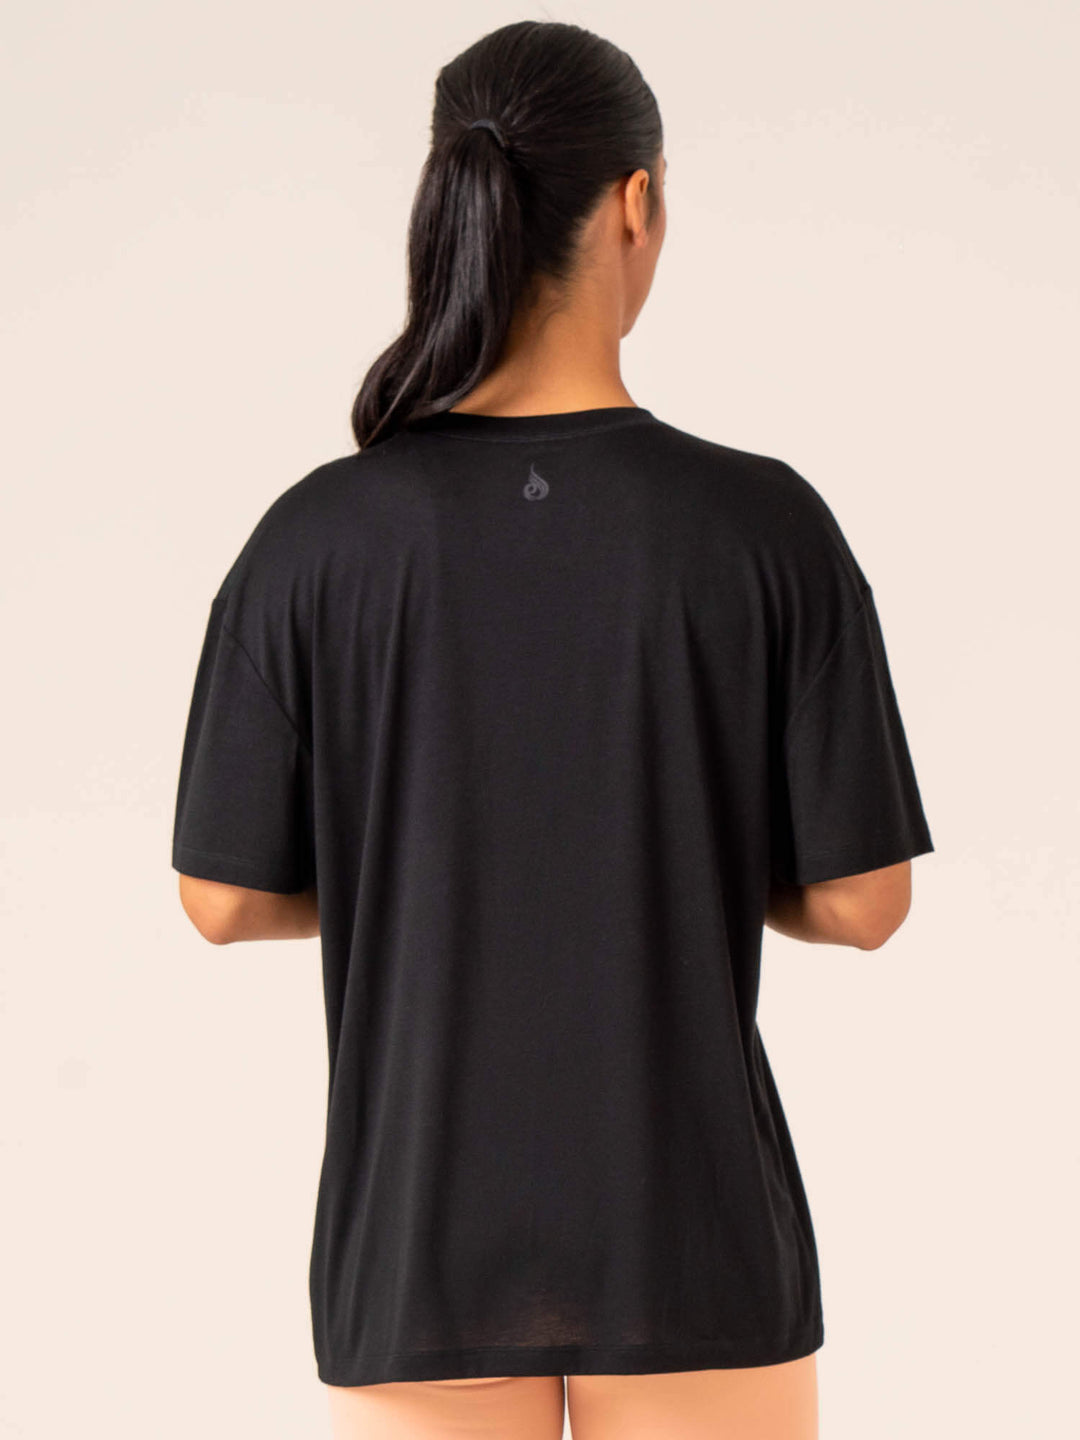 Unstoppable Oversized T-Shirt - Black Clothing Ryderwear 